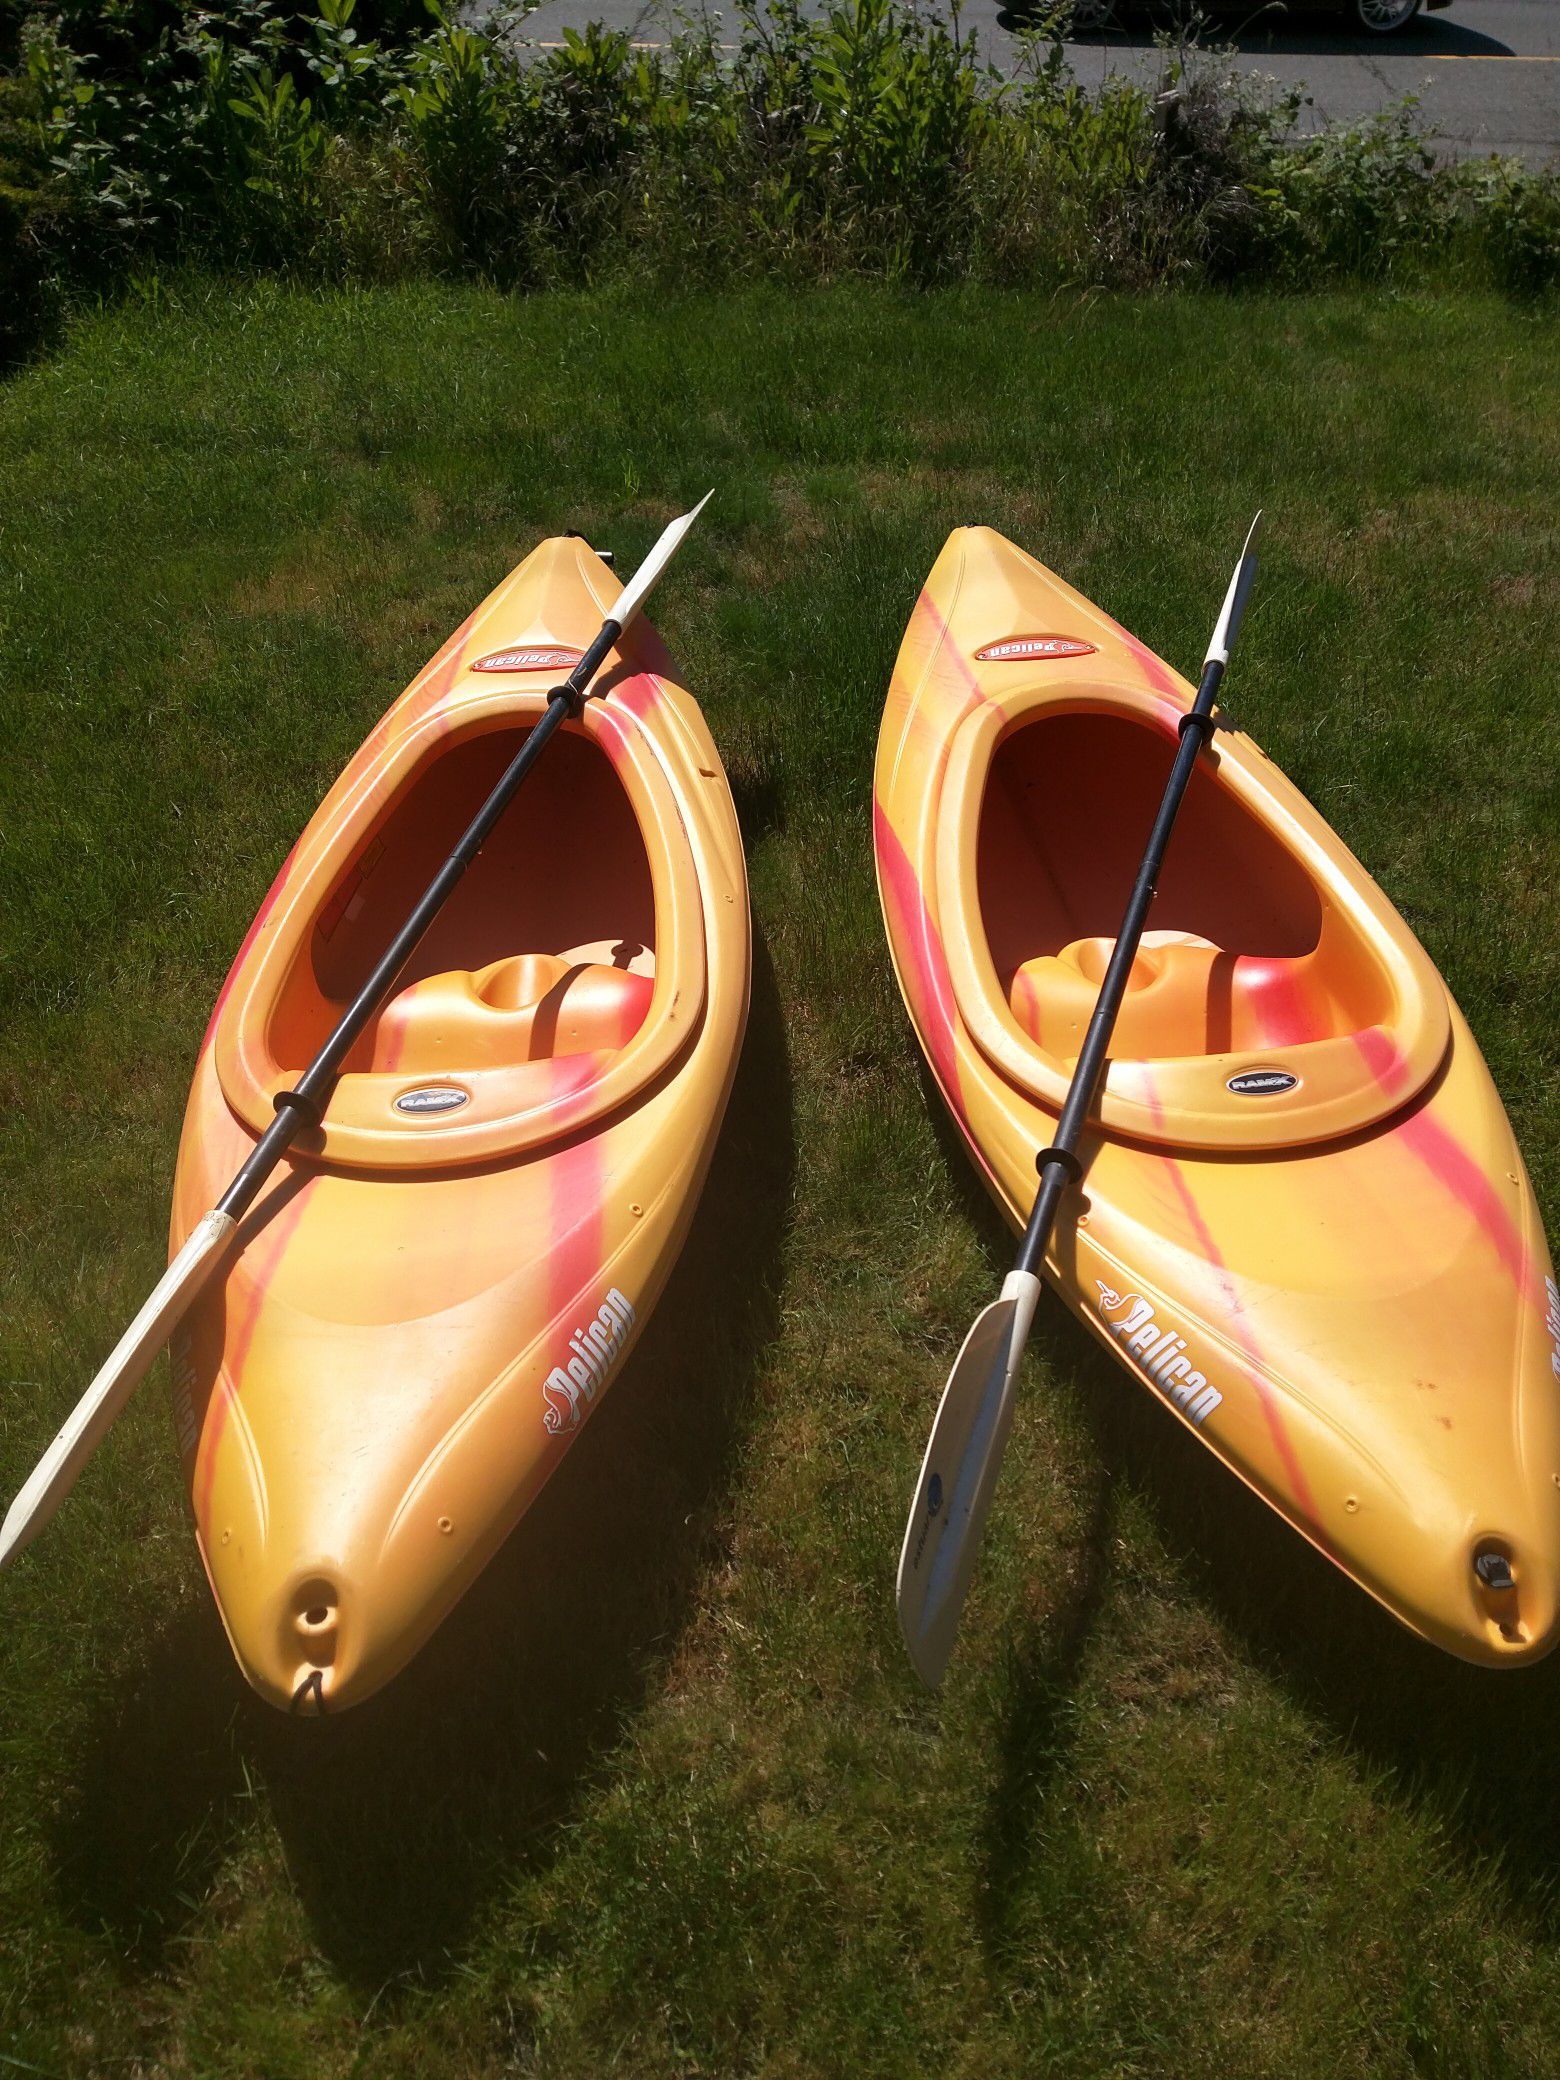 Two Pelican 8' Kayaks